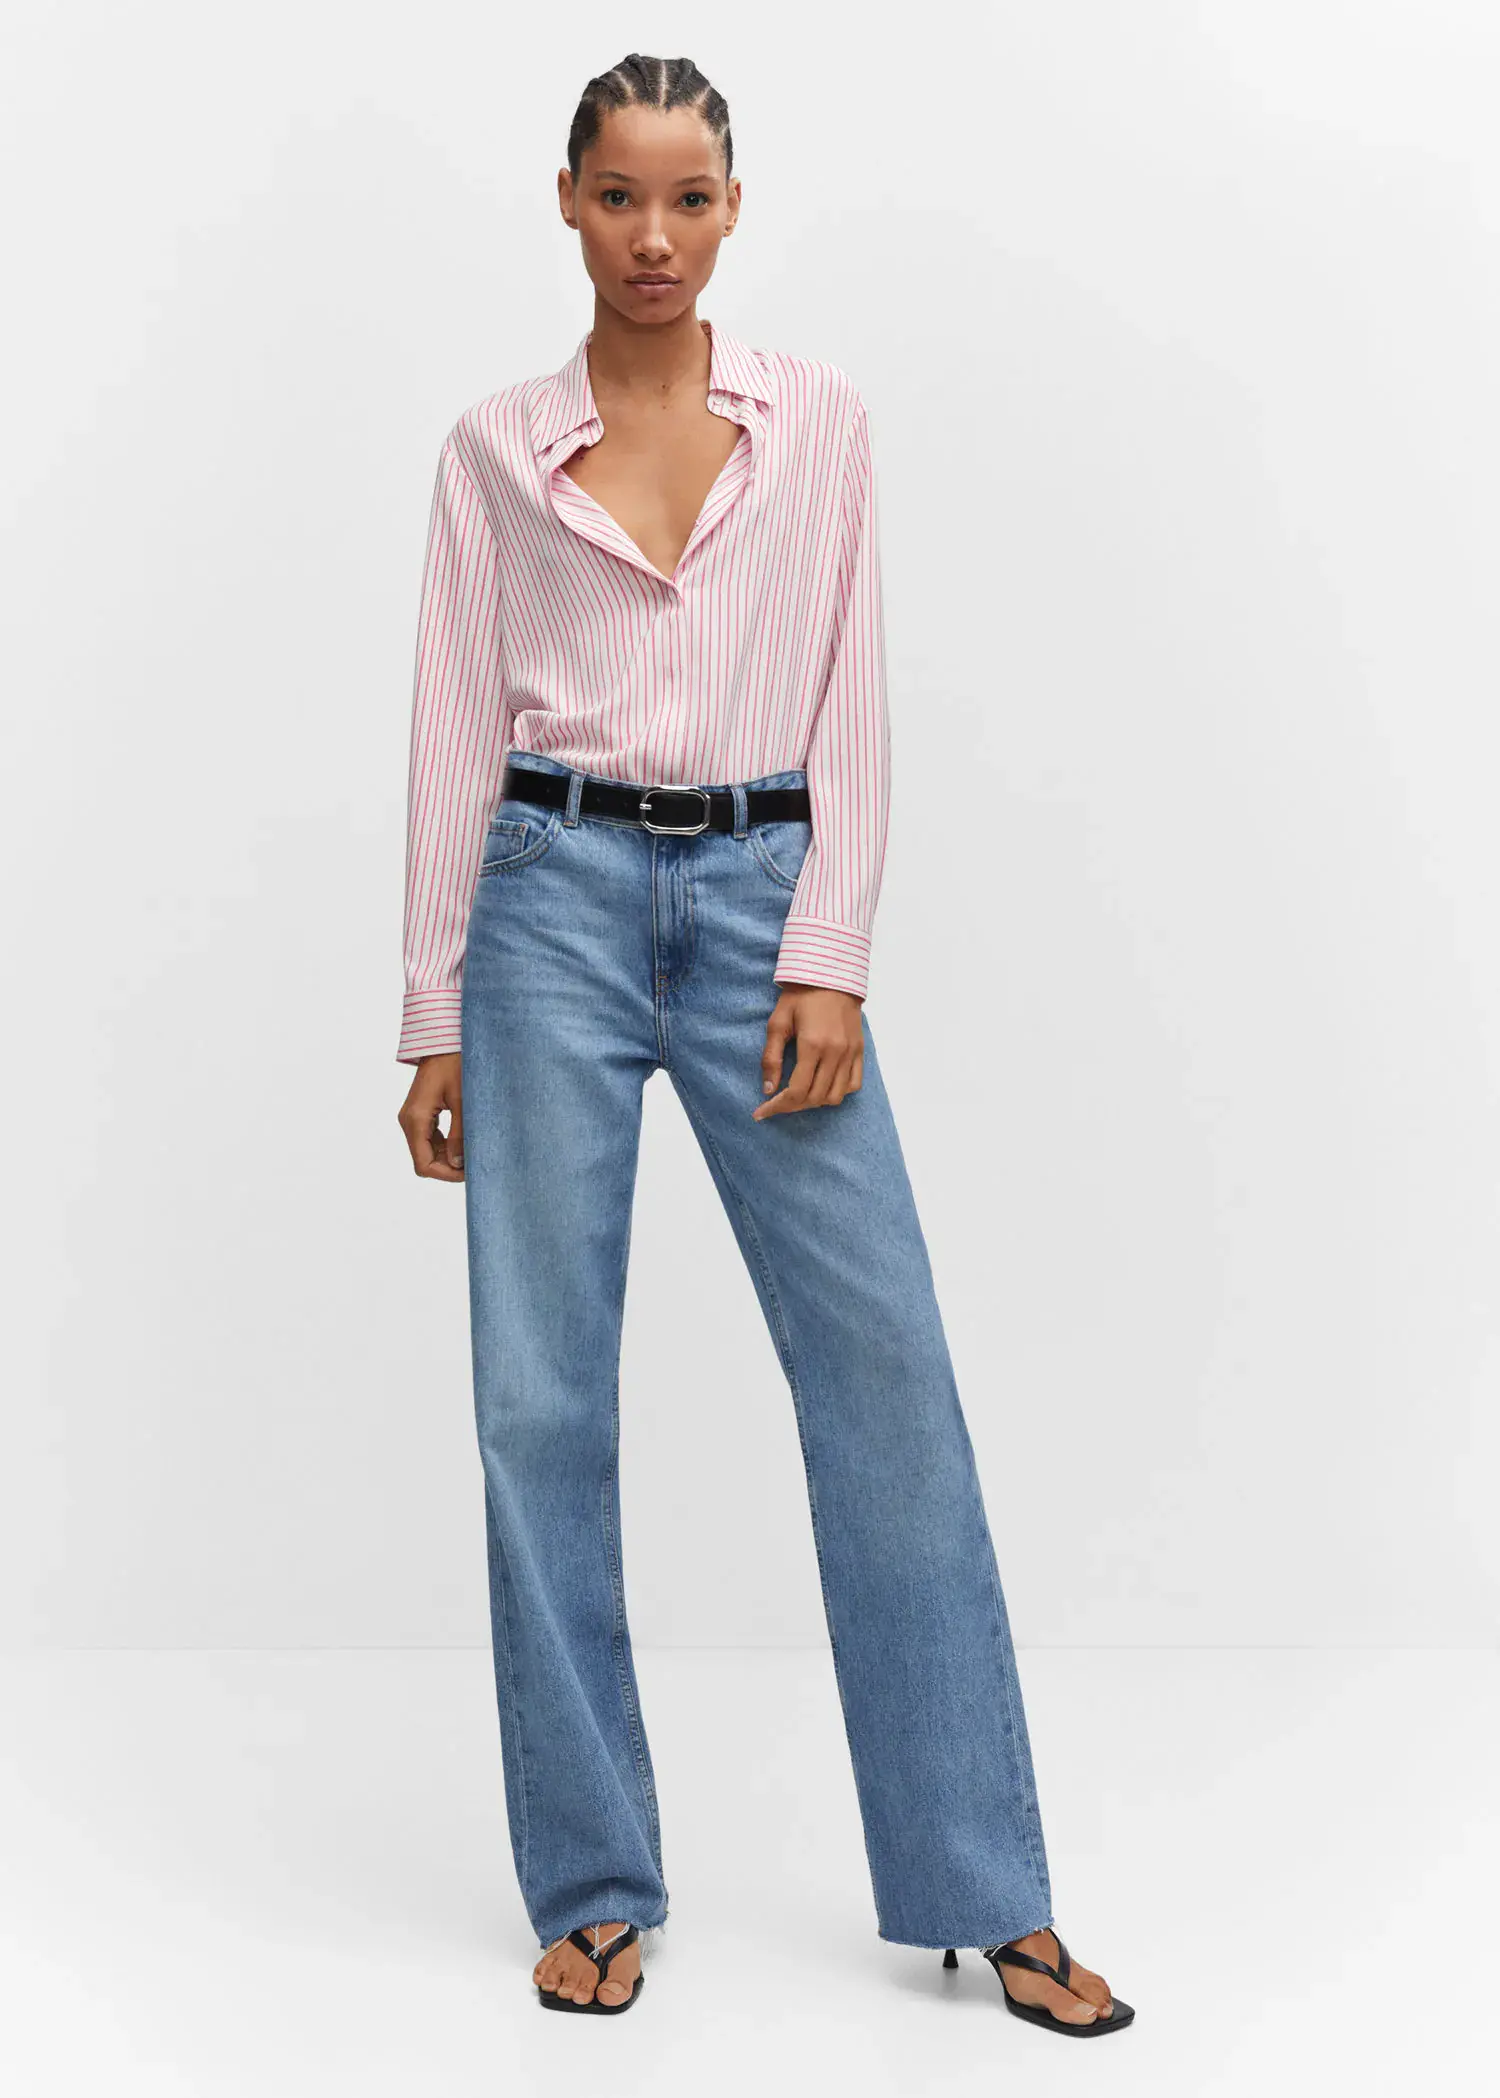 Mango Regular flowy shirt. a woman in a pink shirt and blue jeans. 